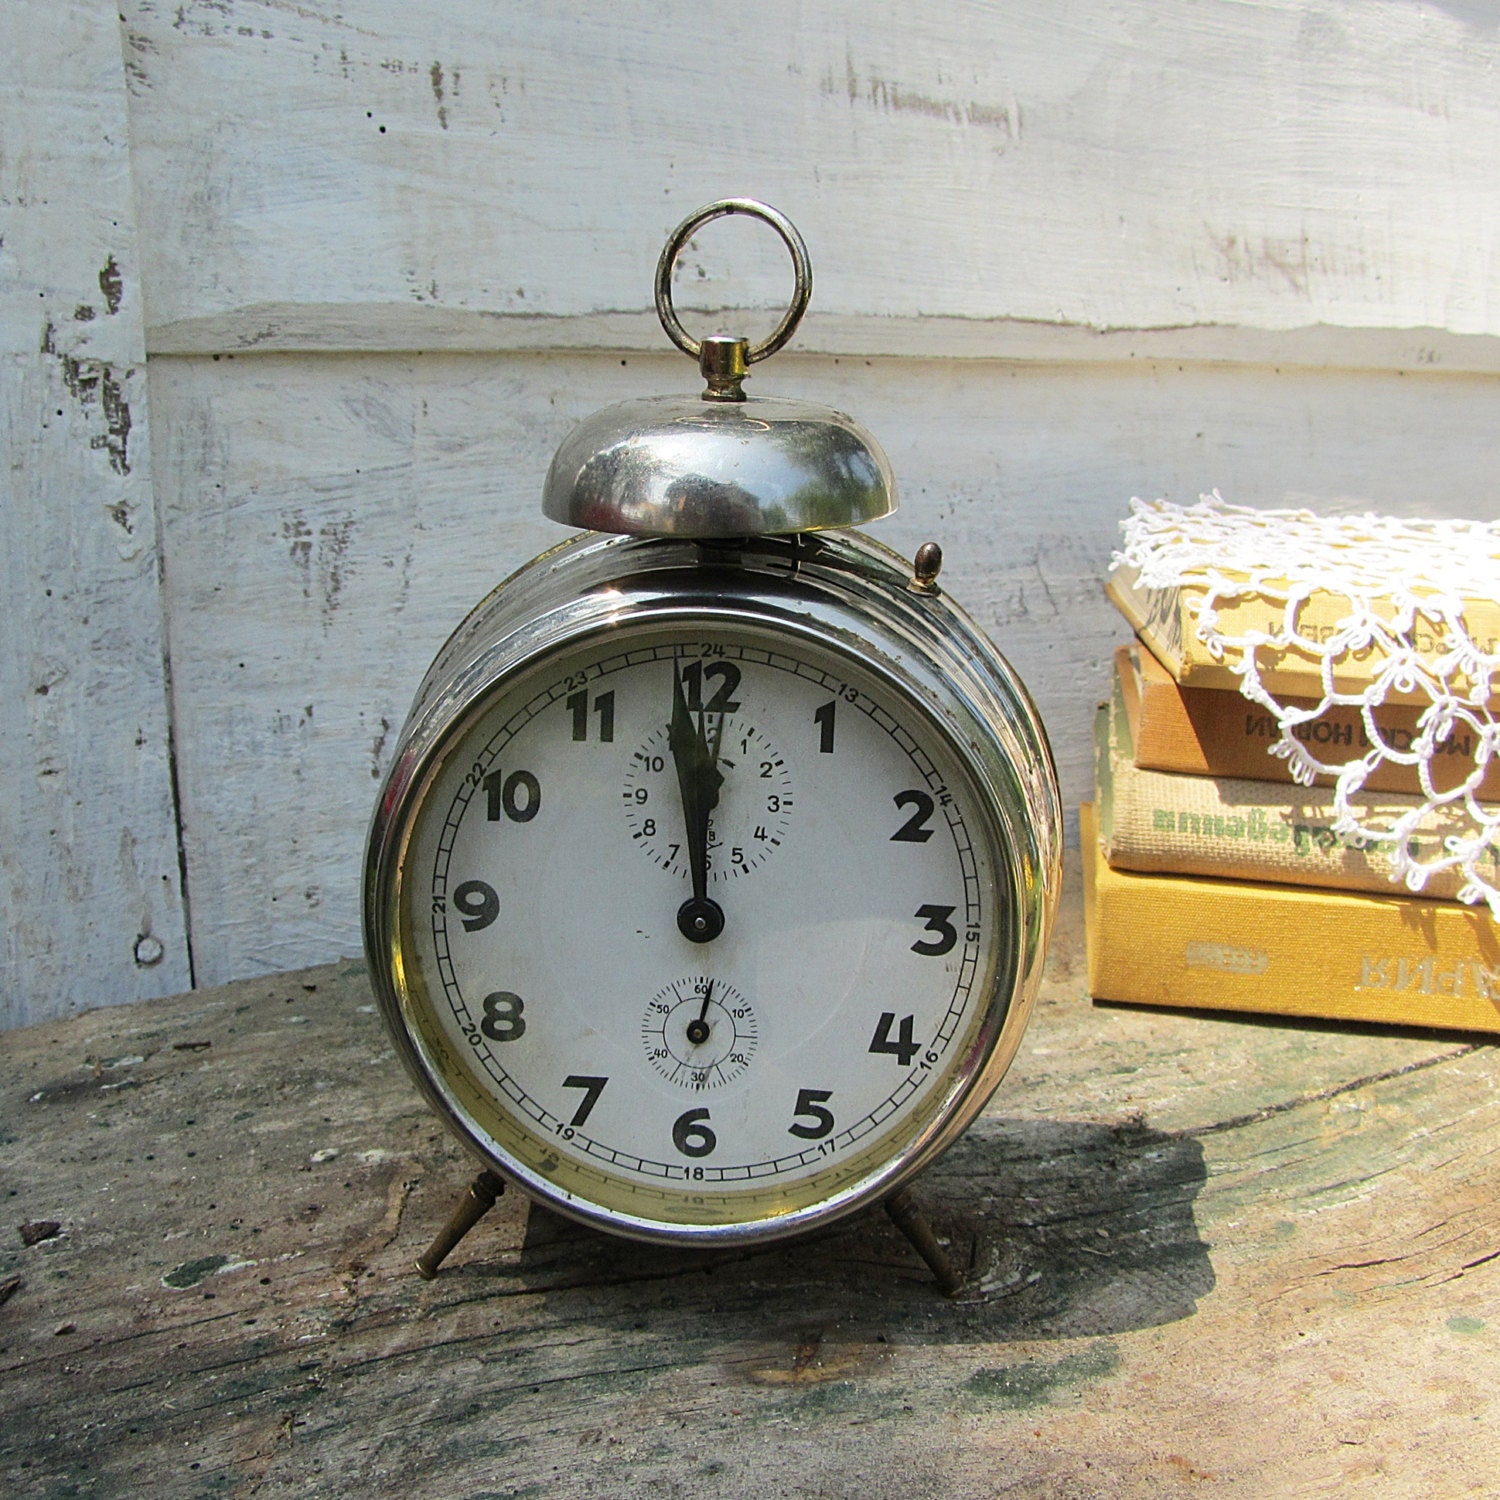 Vintage German alarm clock Gustav Becker, retro alarm clock, antique clock 1920s, worcking vintage clock, collectible - TedDiscovery